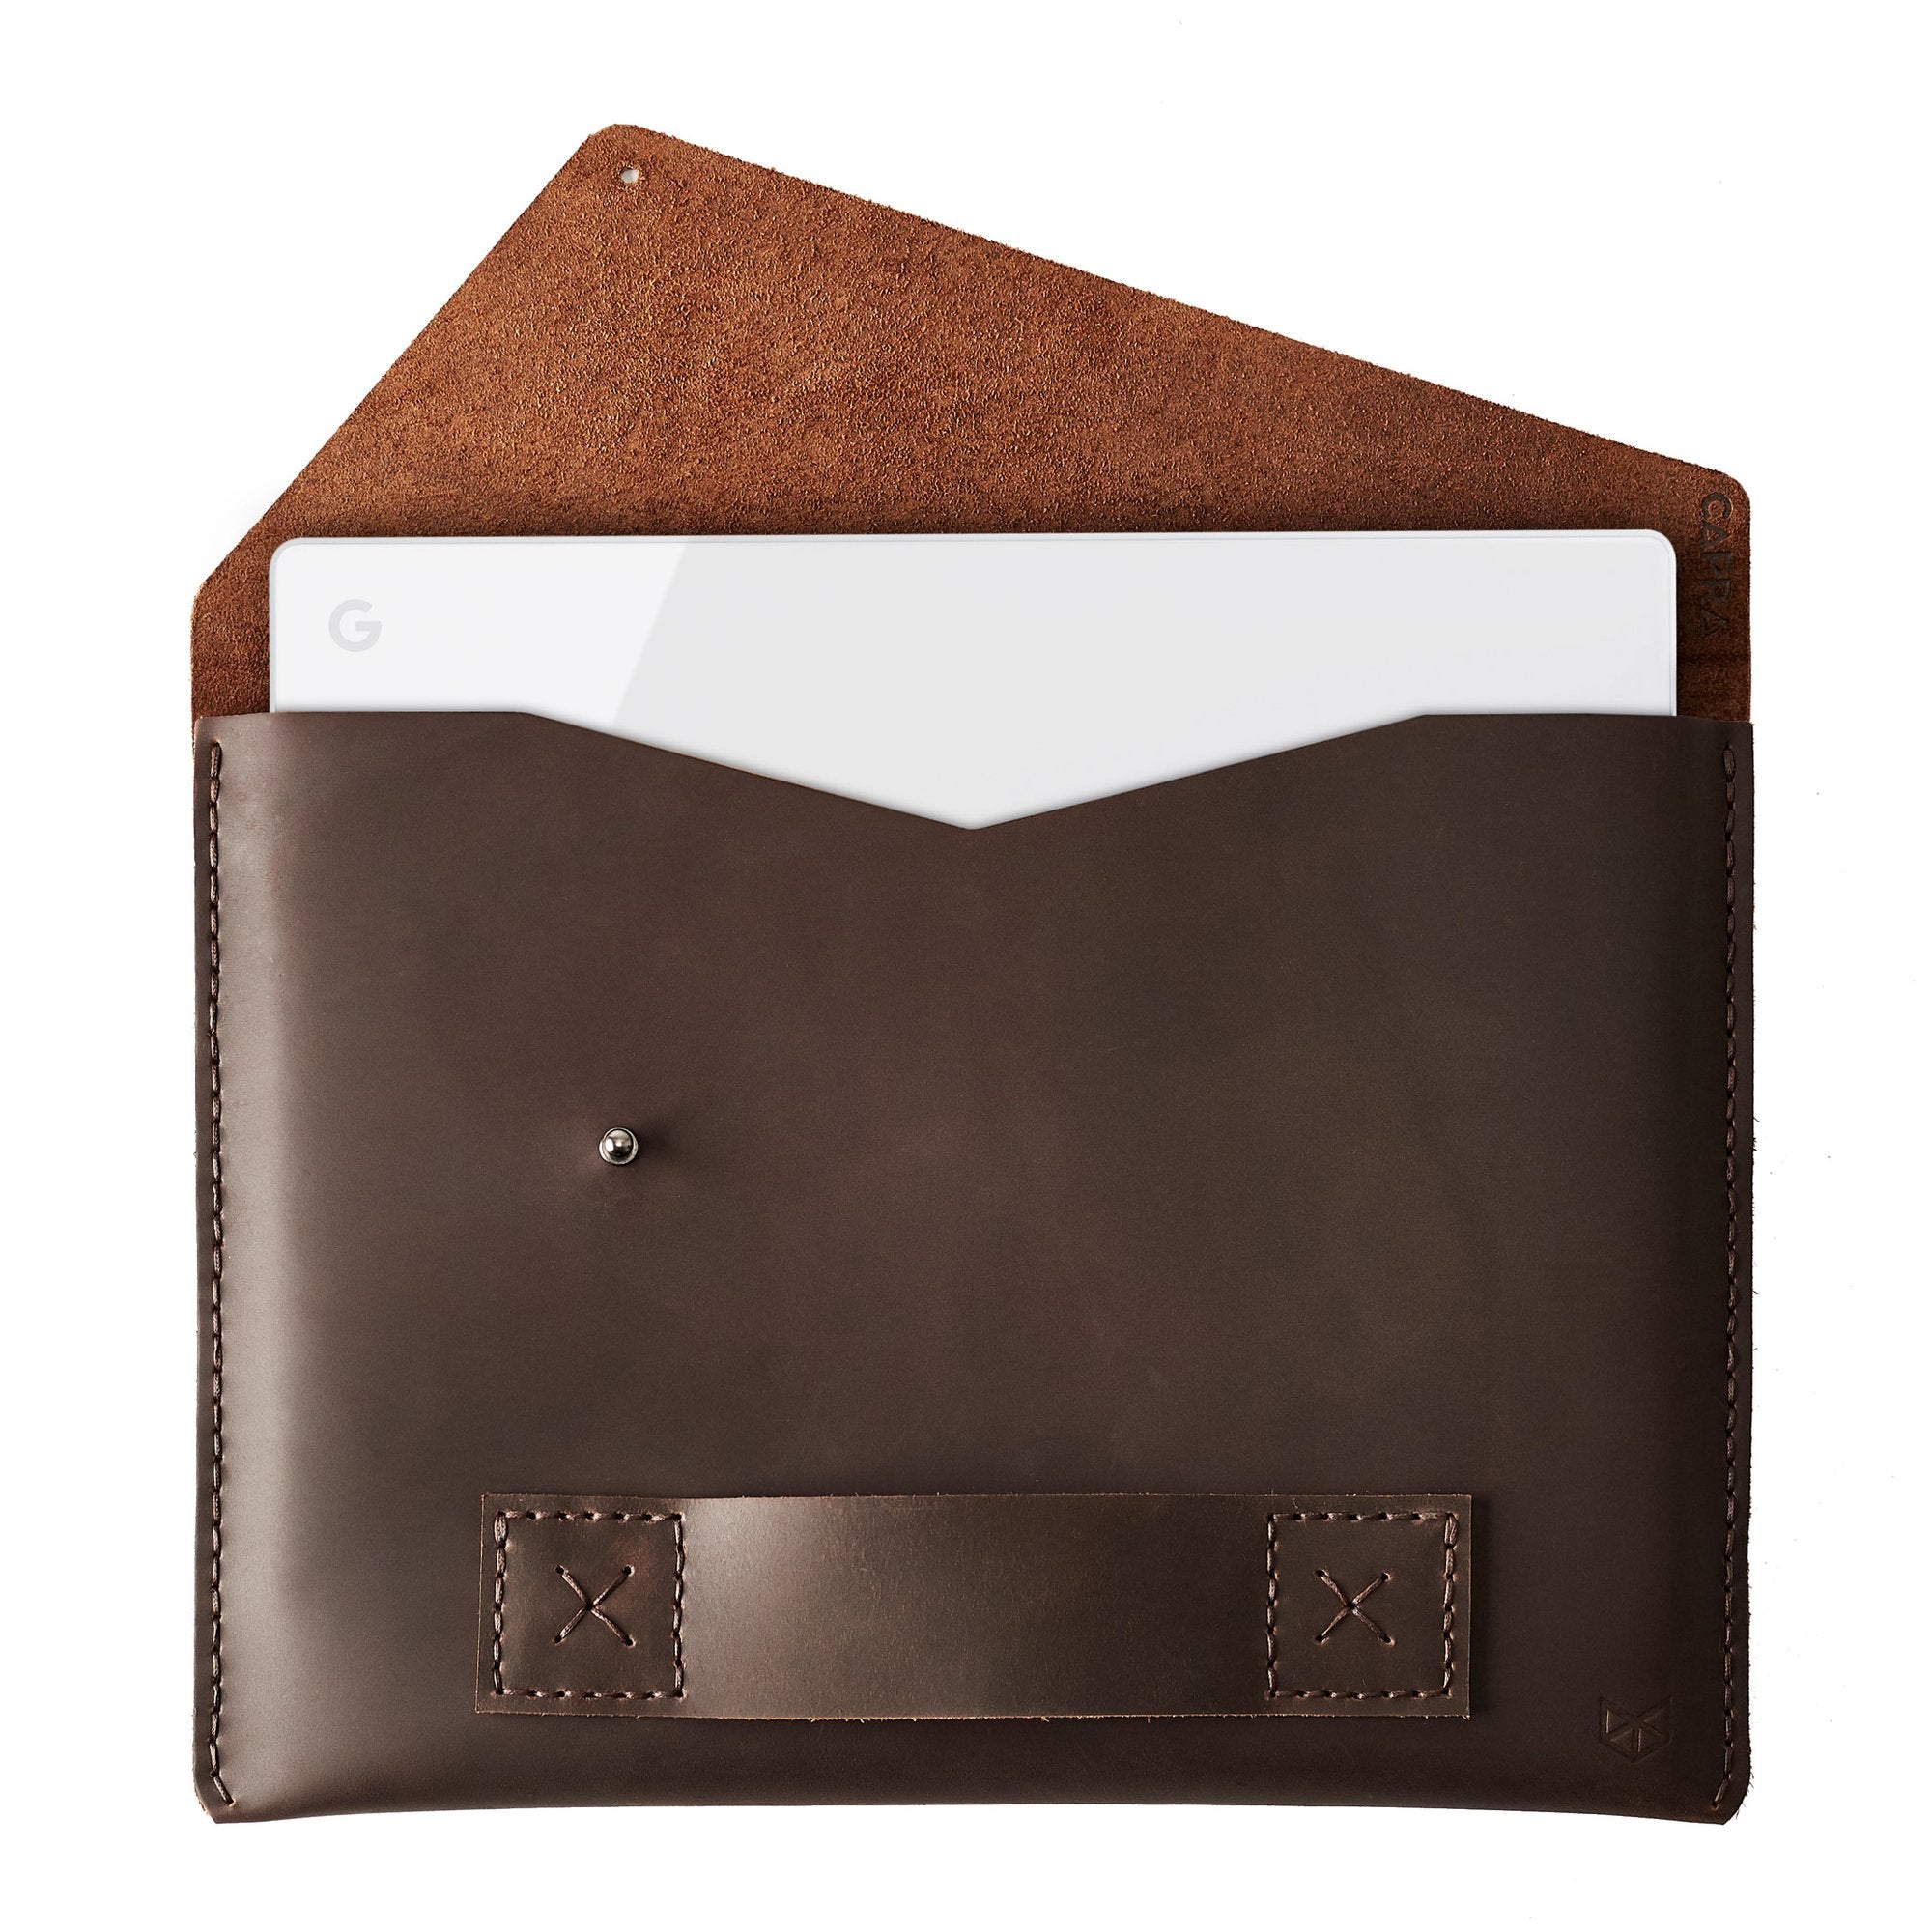 Custom engraving. Google Pixelbook brown leather case with pen holder. Pixelbook laptop mens folio